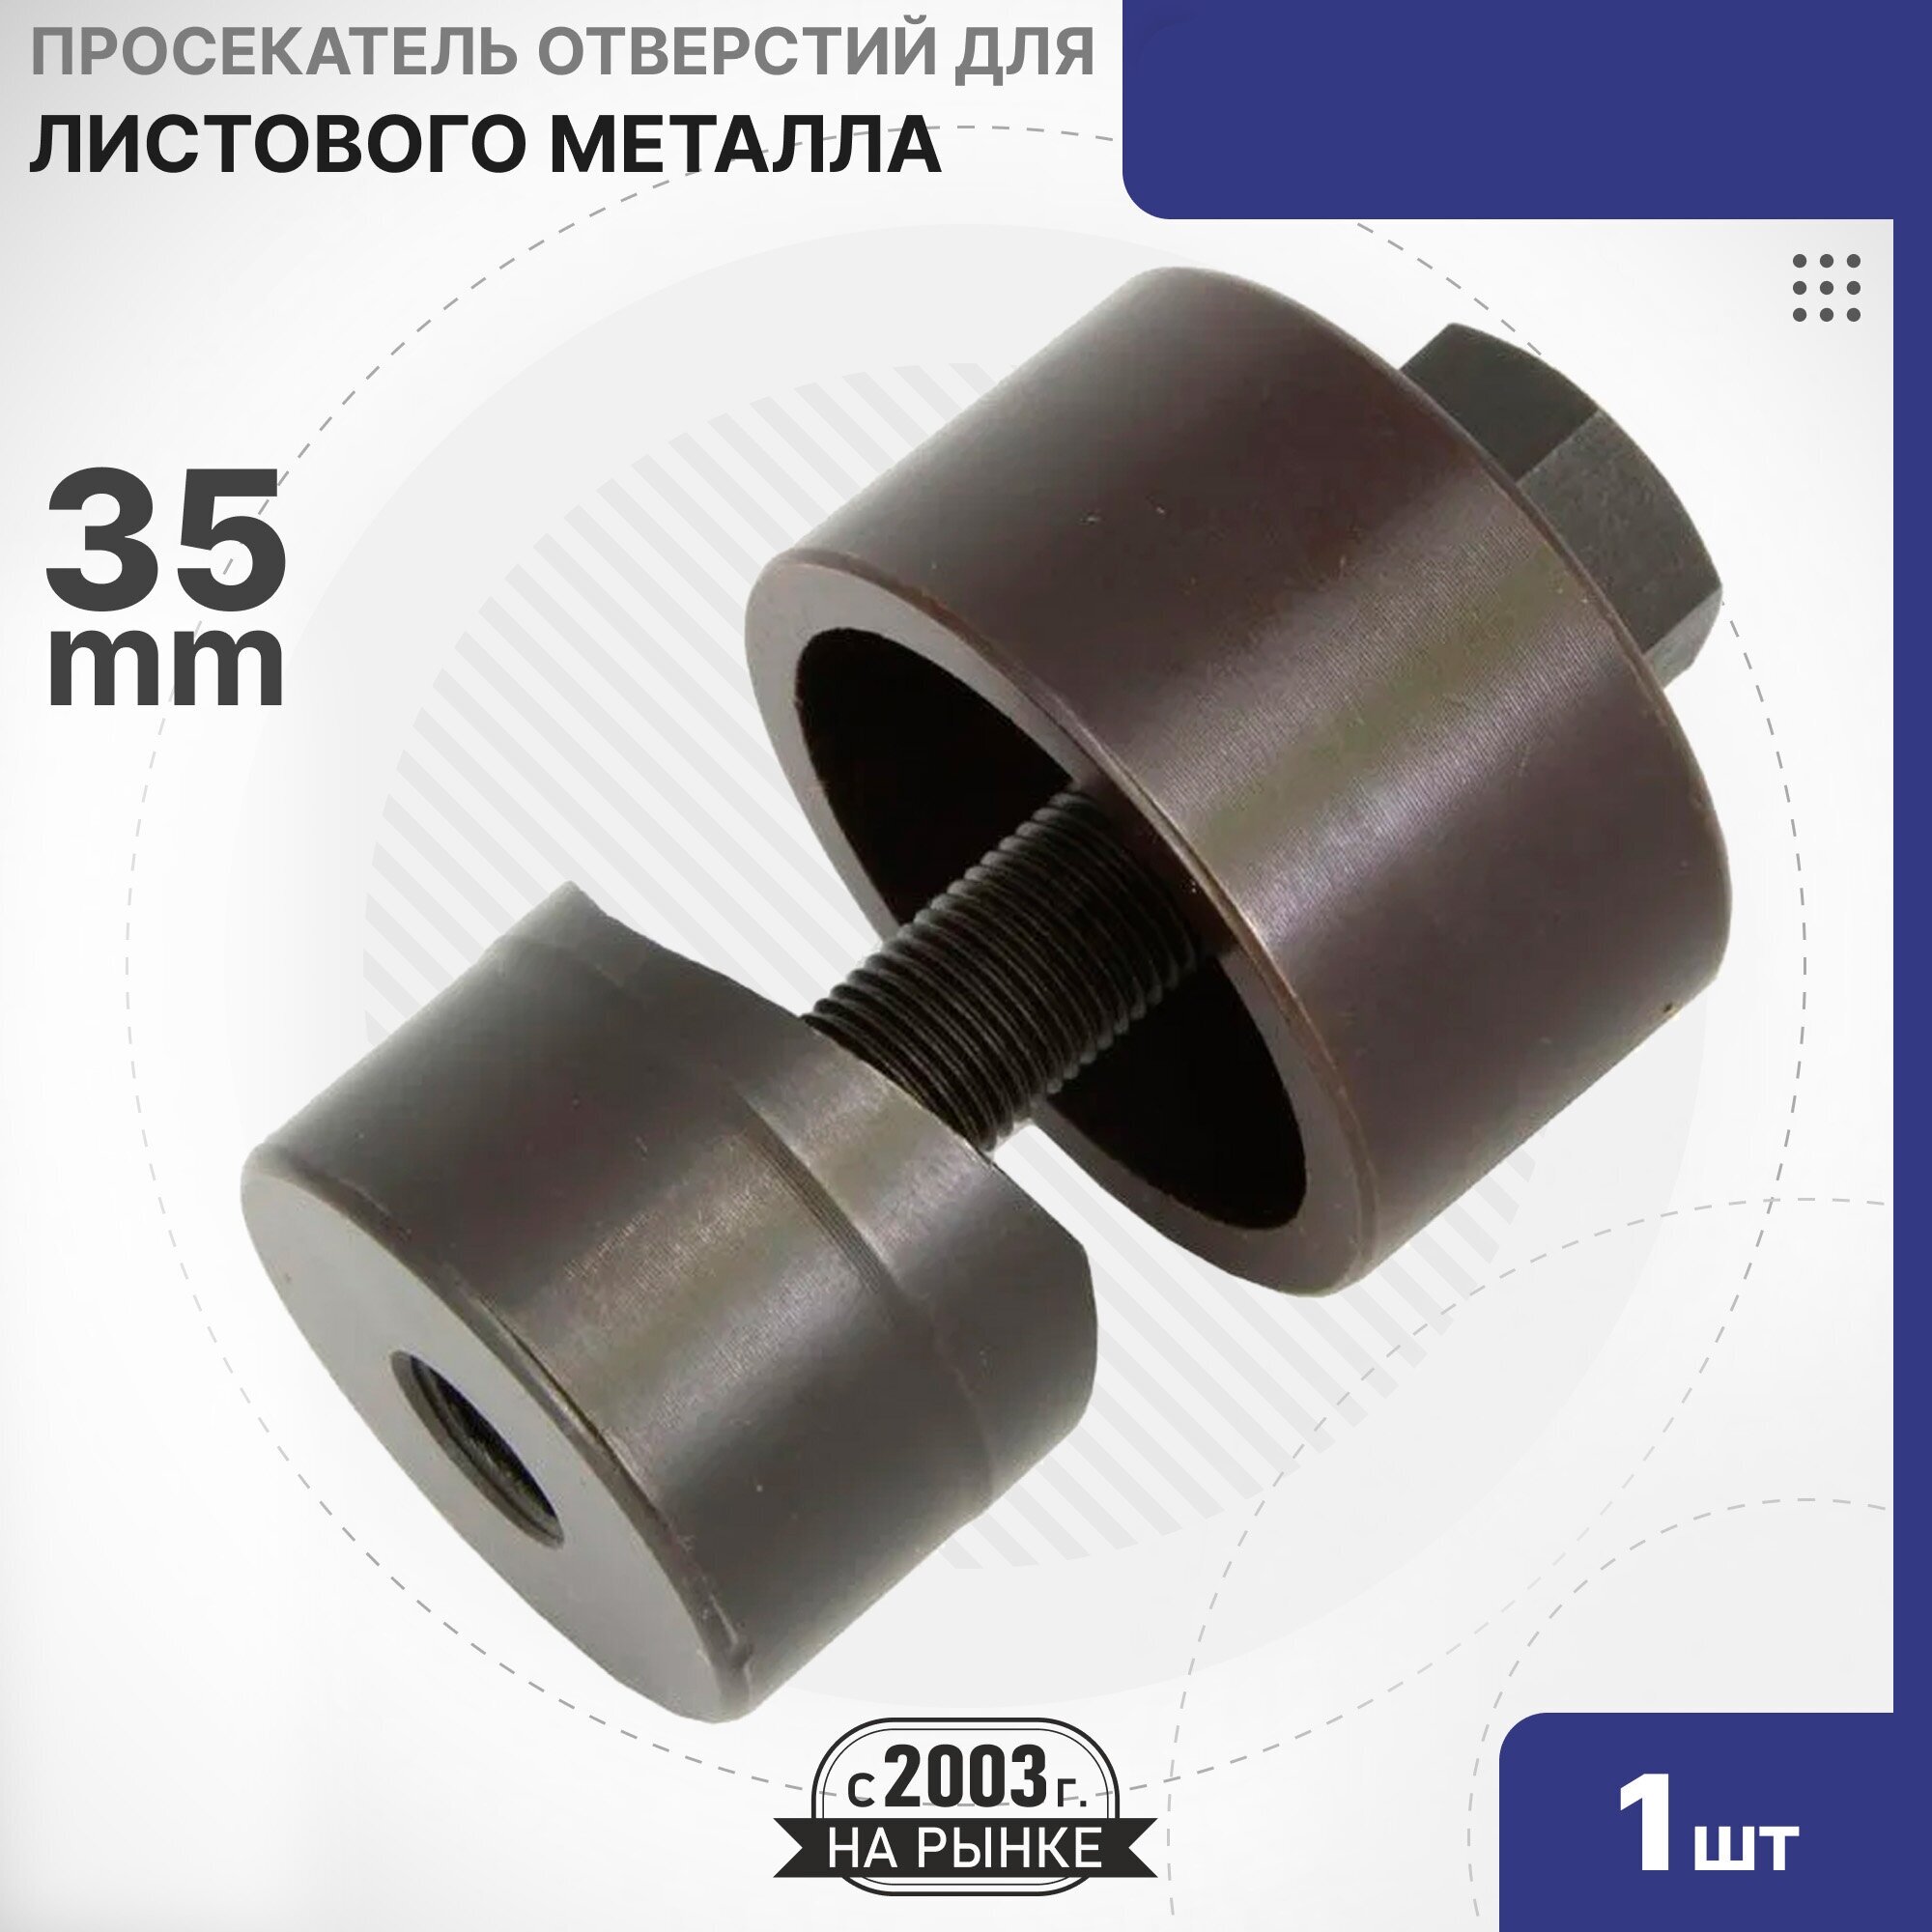 Просекатель листового металла Mr.Logo диаметр 35 мм